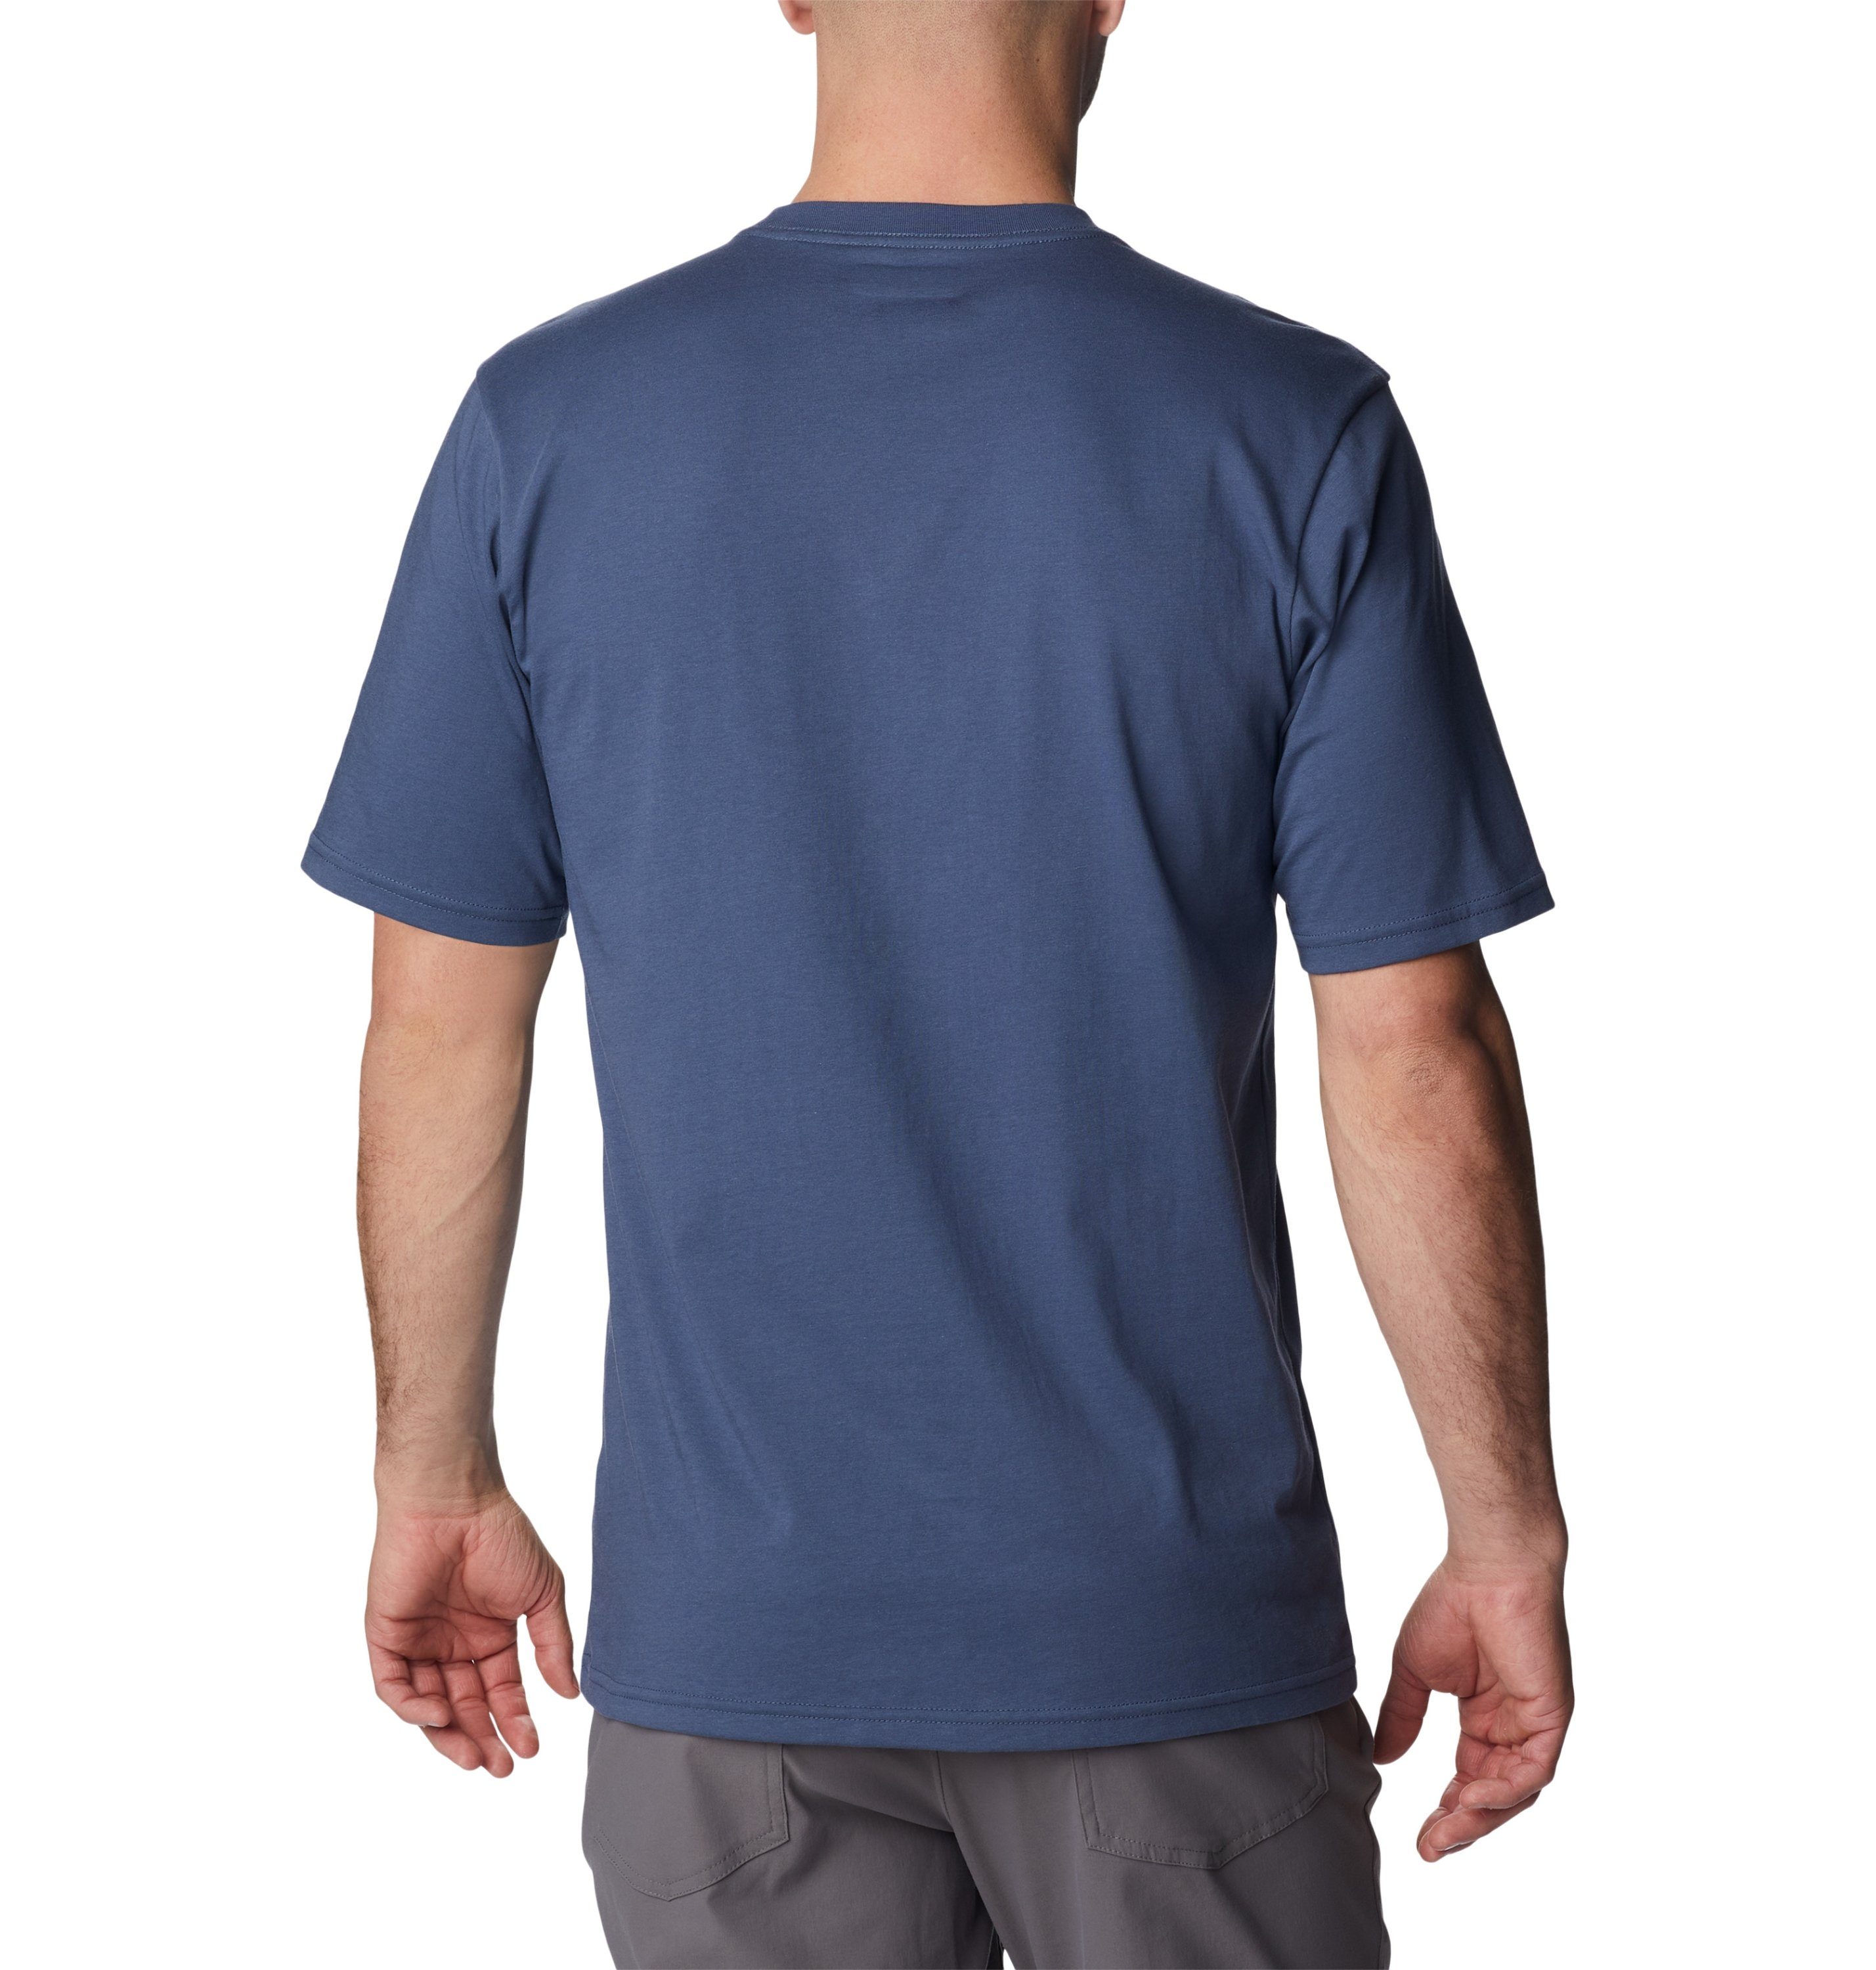 T-Shirt T-Shirt Basic Columbia Herren Logo Mountain CSC Dark Columbia